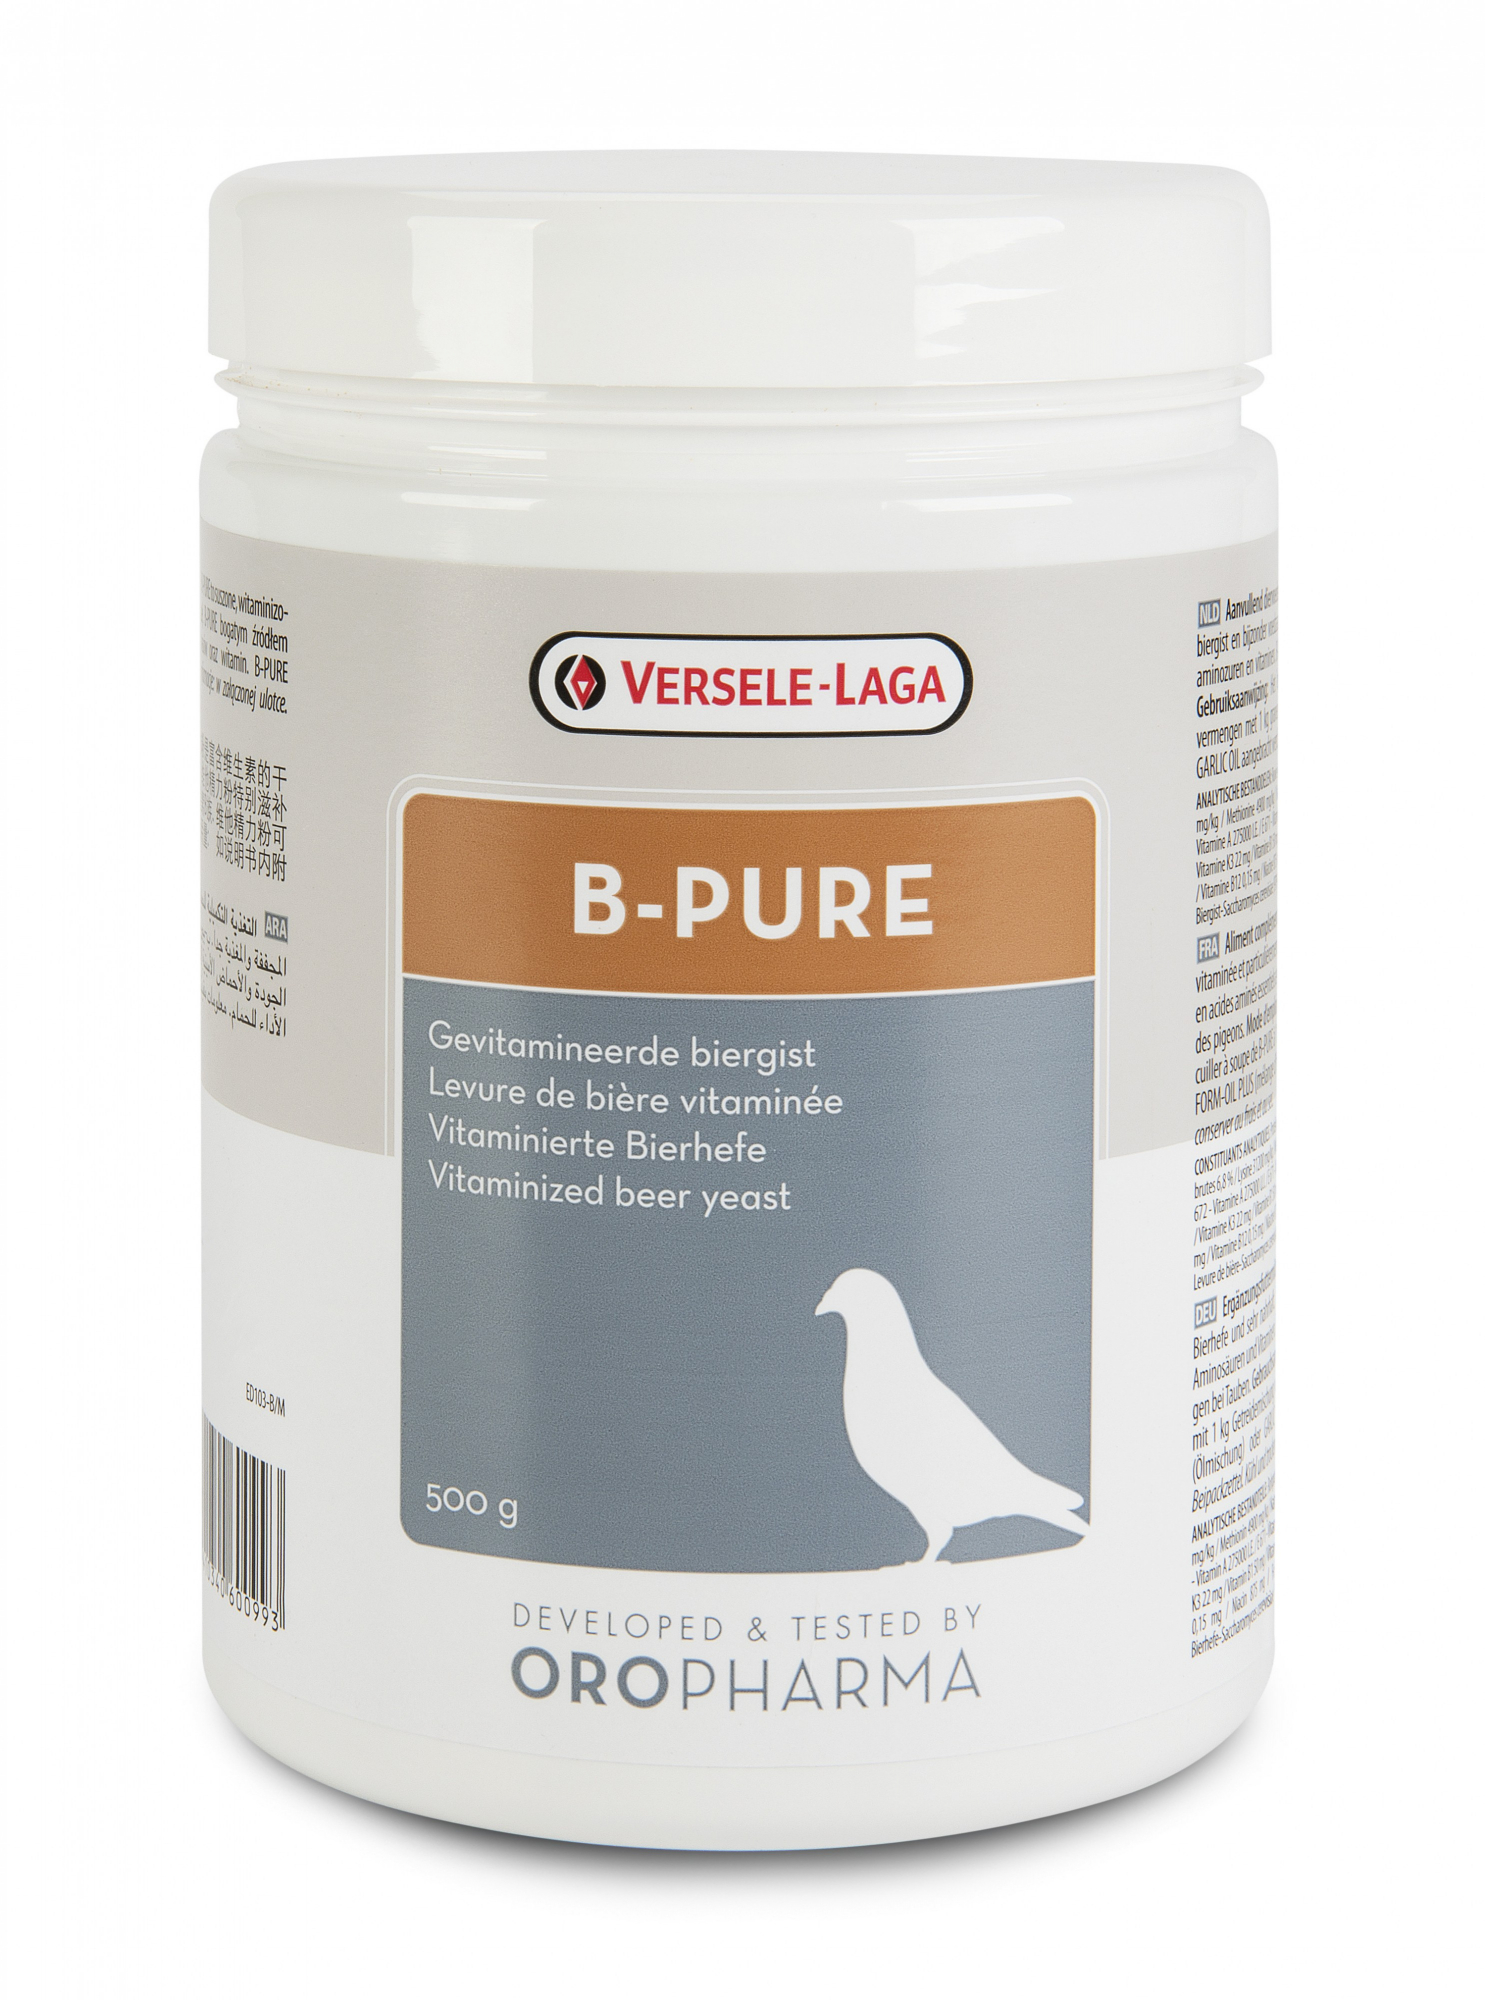 Oropharma B-Pure Vitamin Bierhefe